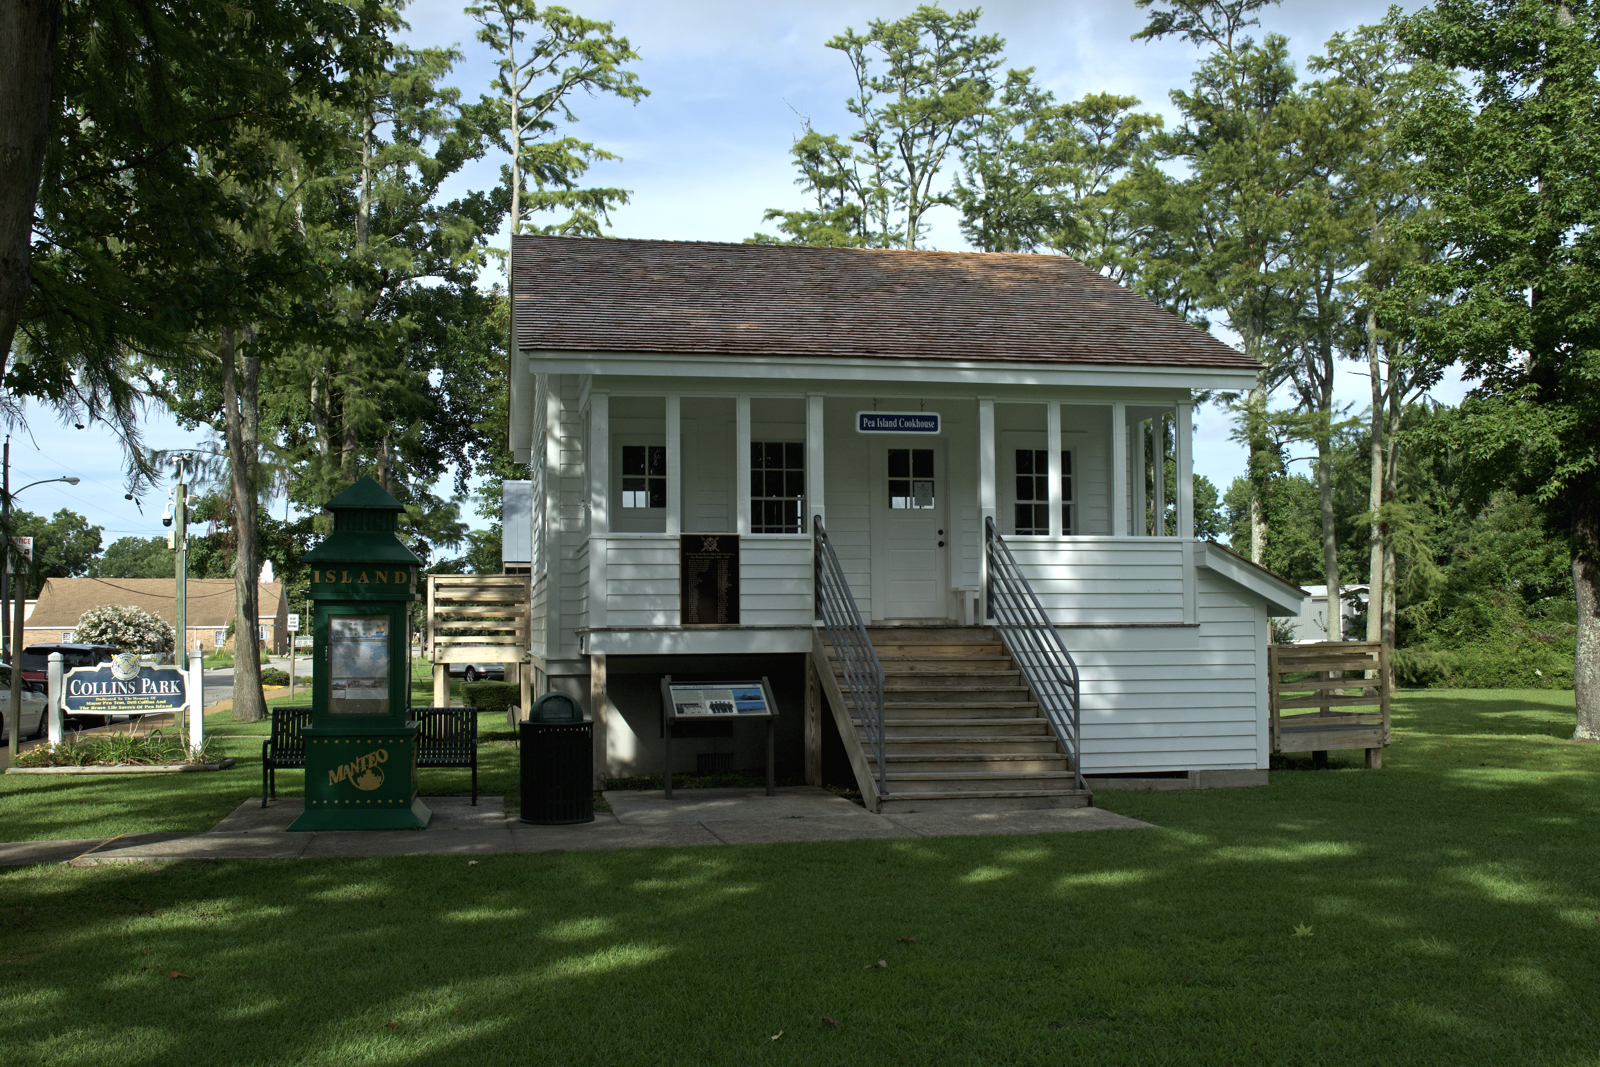 The Pea Island Cookhouse Museum in Manteo. Photo: Kip Tabb